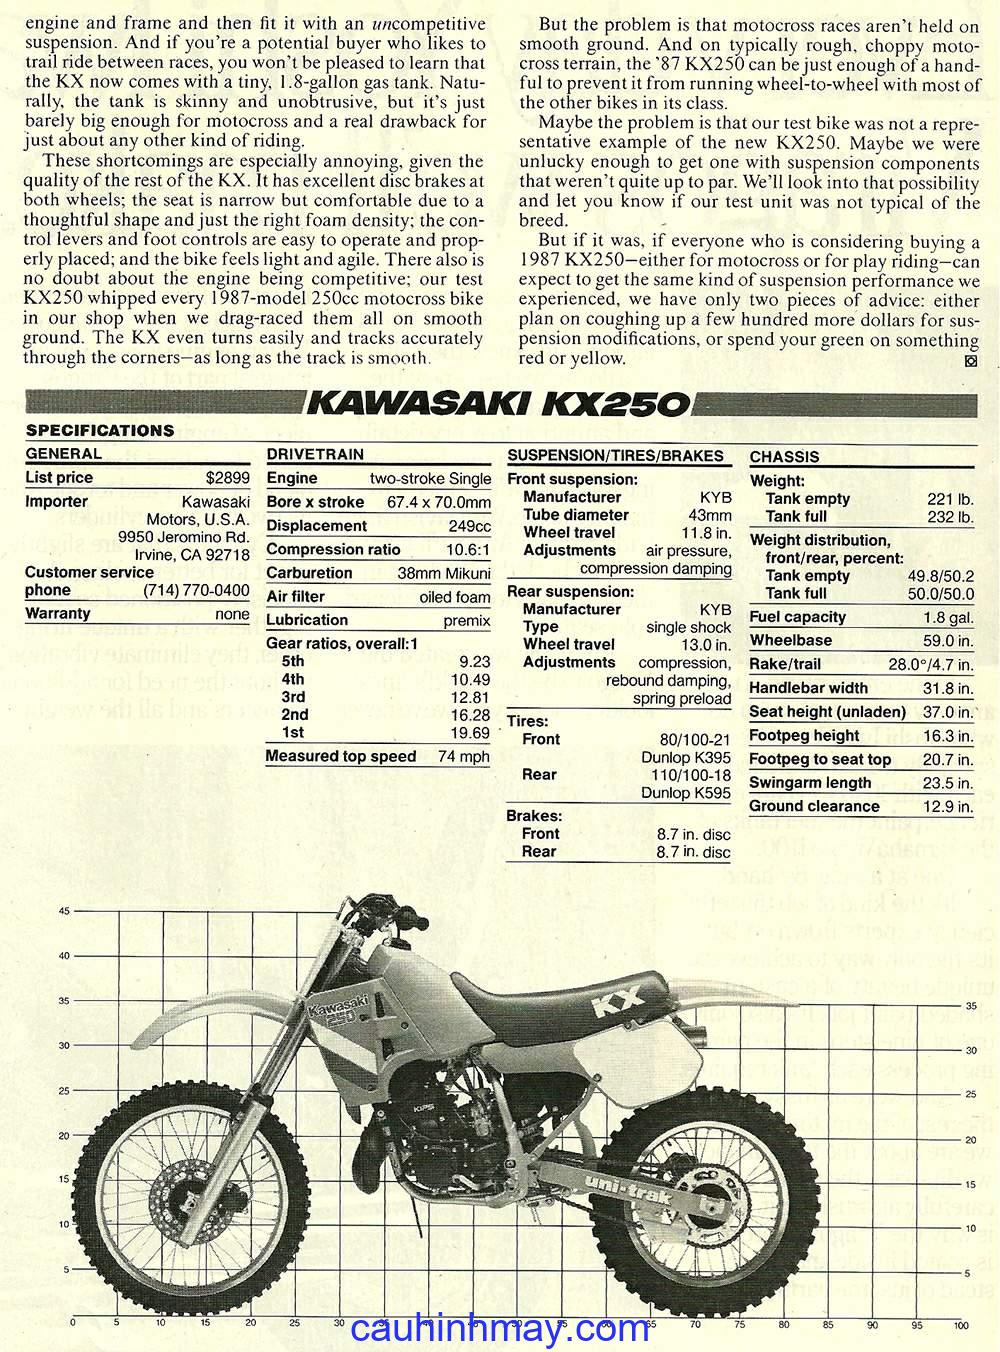 1987 KAWASAKI KX 250 - cauhinhmay.com